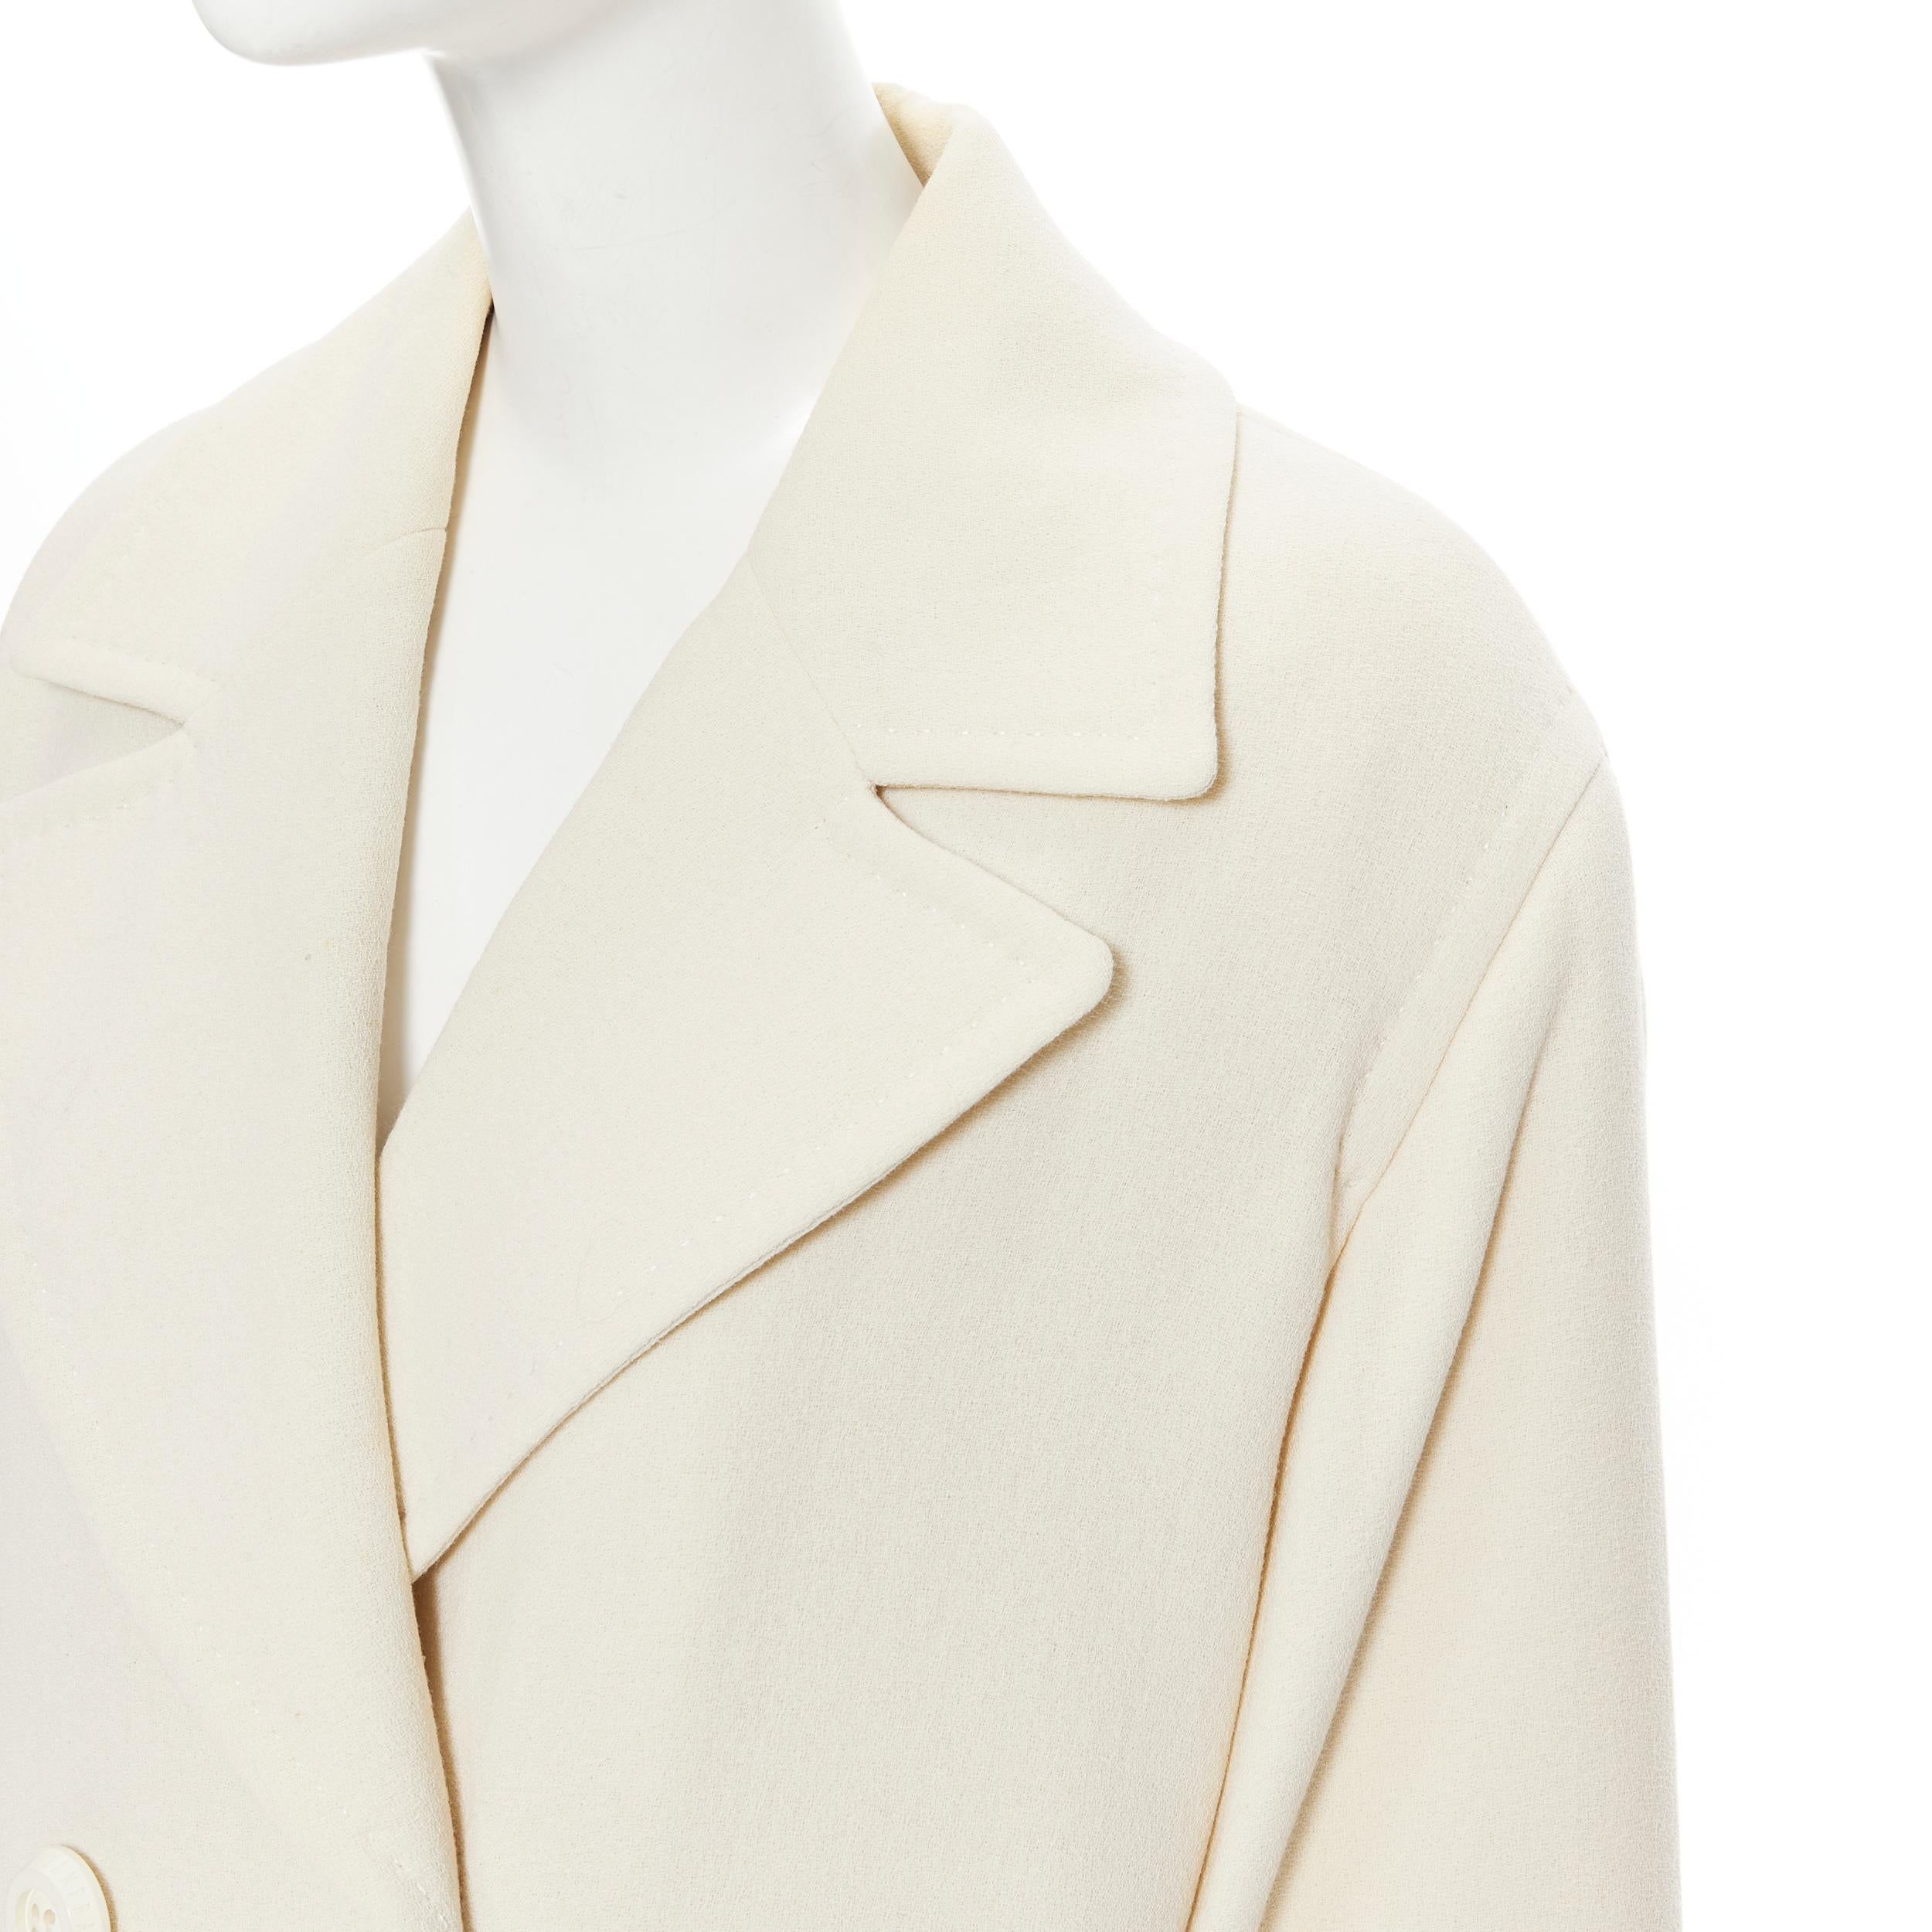 GIANFRANCO FERRE STUDIO ivory wool crepe double breasted coat jacket IT42 M 2